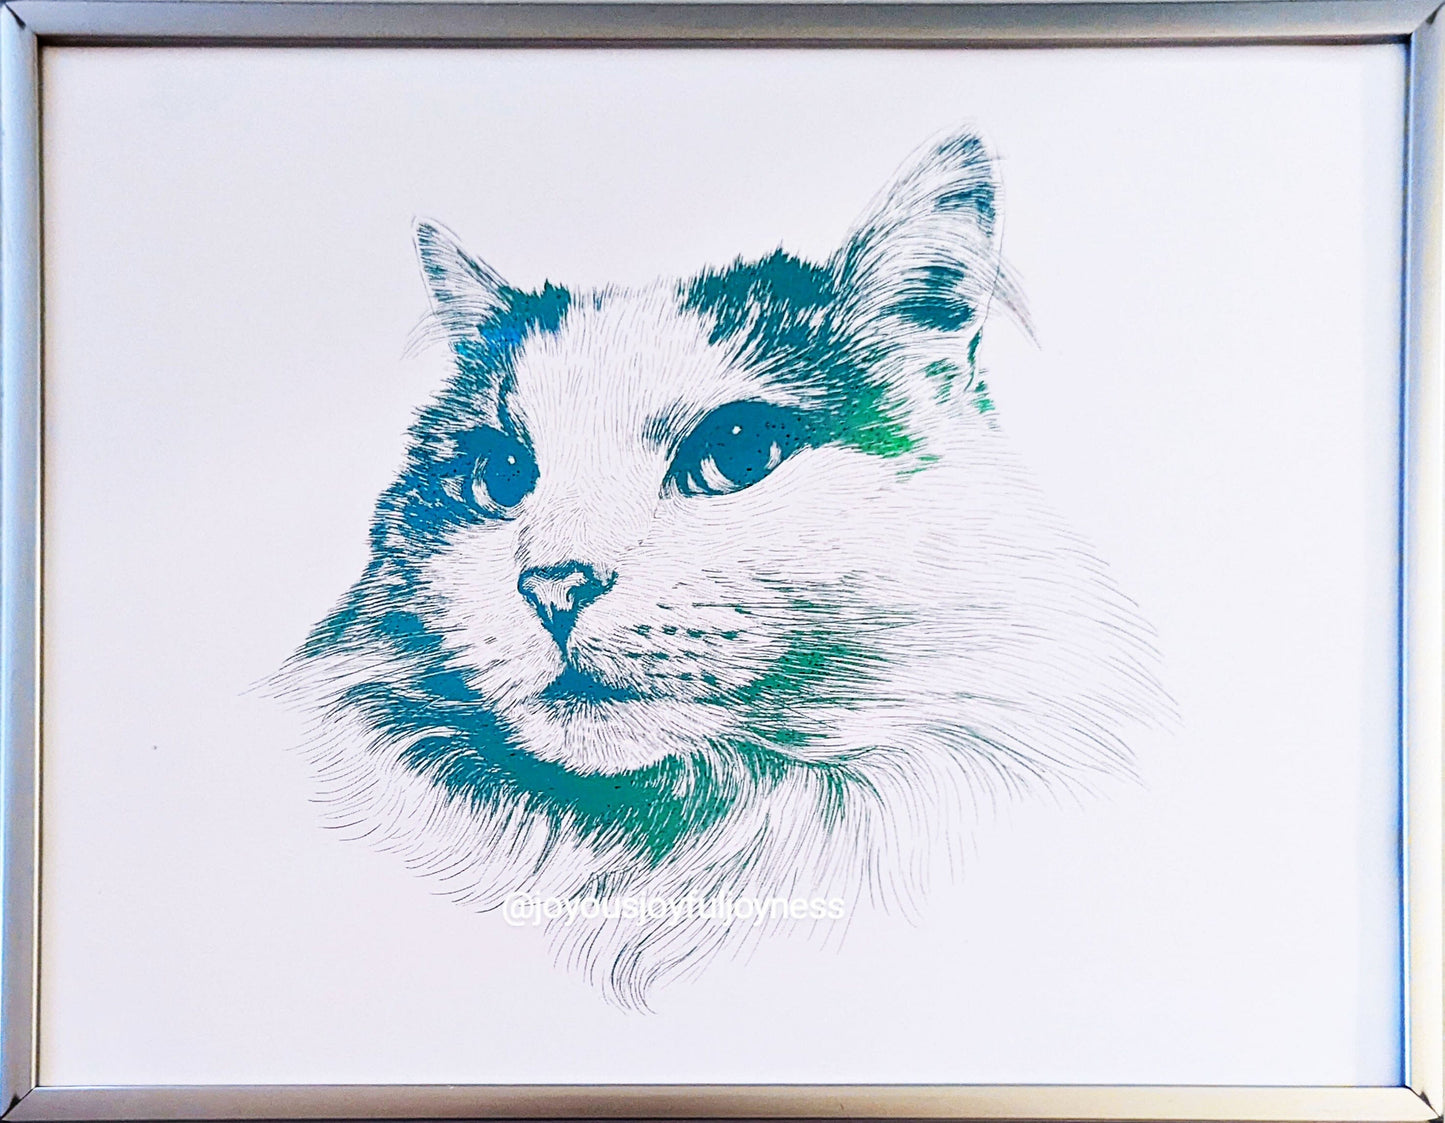 Custom Drawings Of Kittens Posters, Prints, & Visual Artwork JoyousJoyfulJoyness 